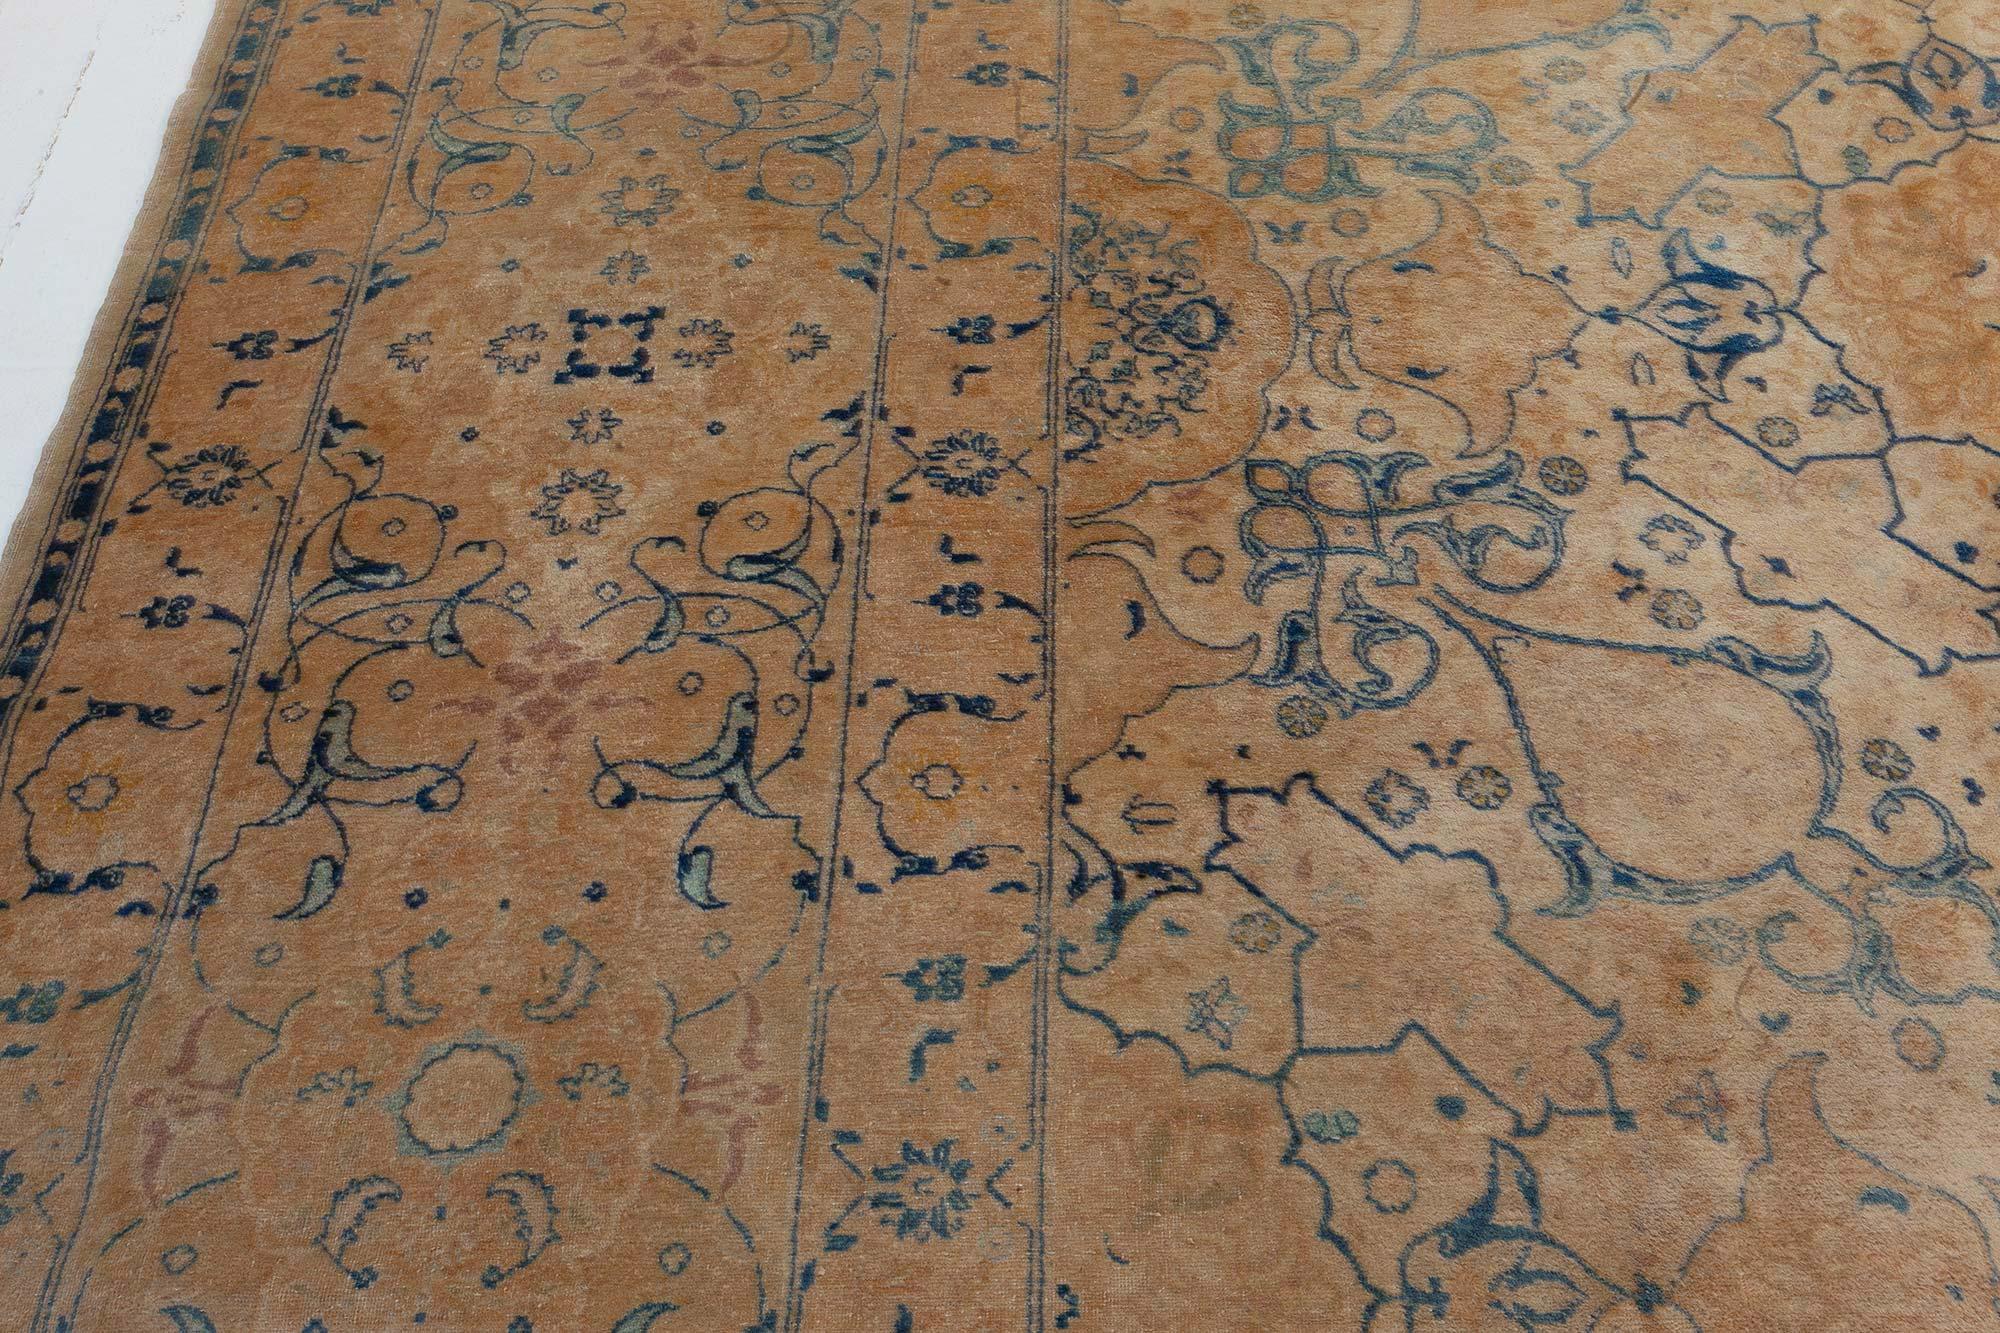 Authentic Persian Tabriz vintage handmade carpet
Size: 11'9